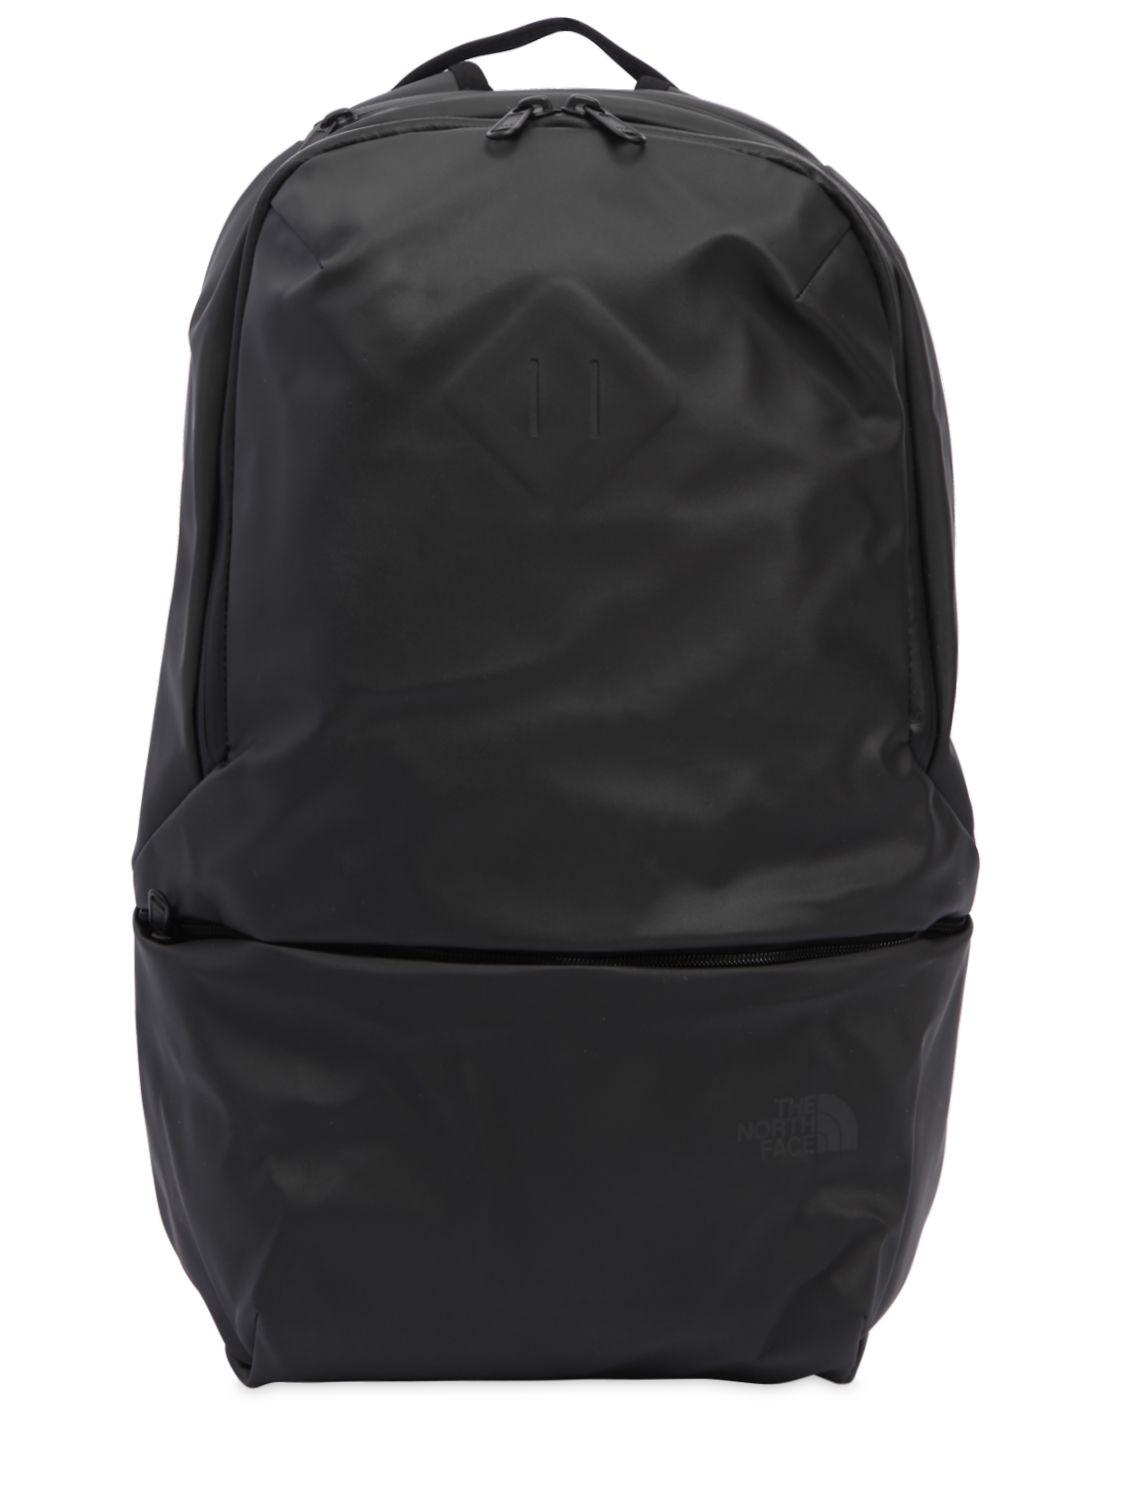 The North Face 20l Bttfb Backpack in Black for Men - Lyst